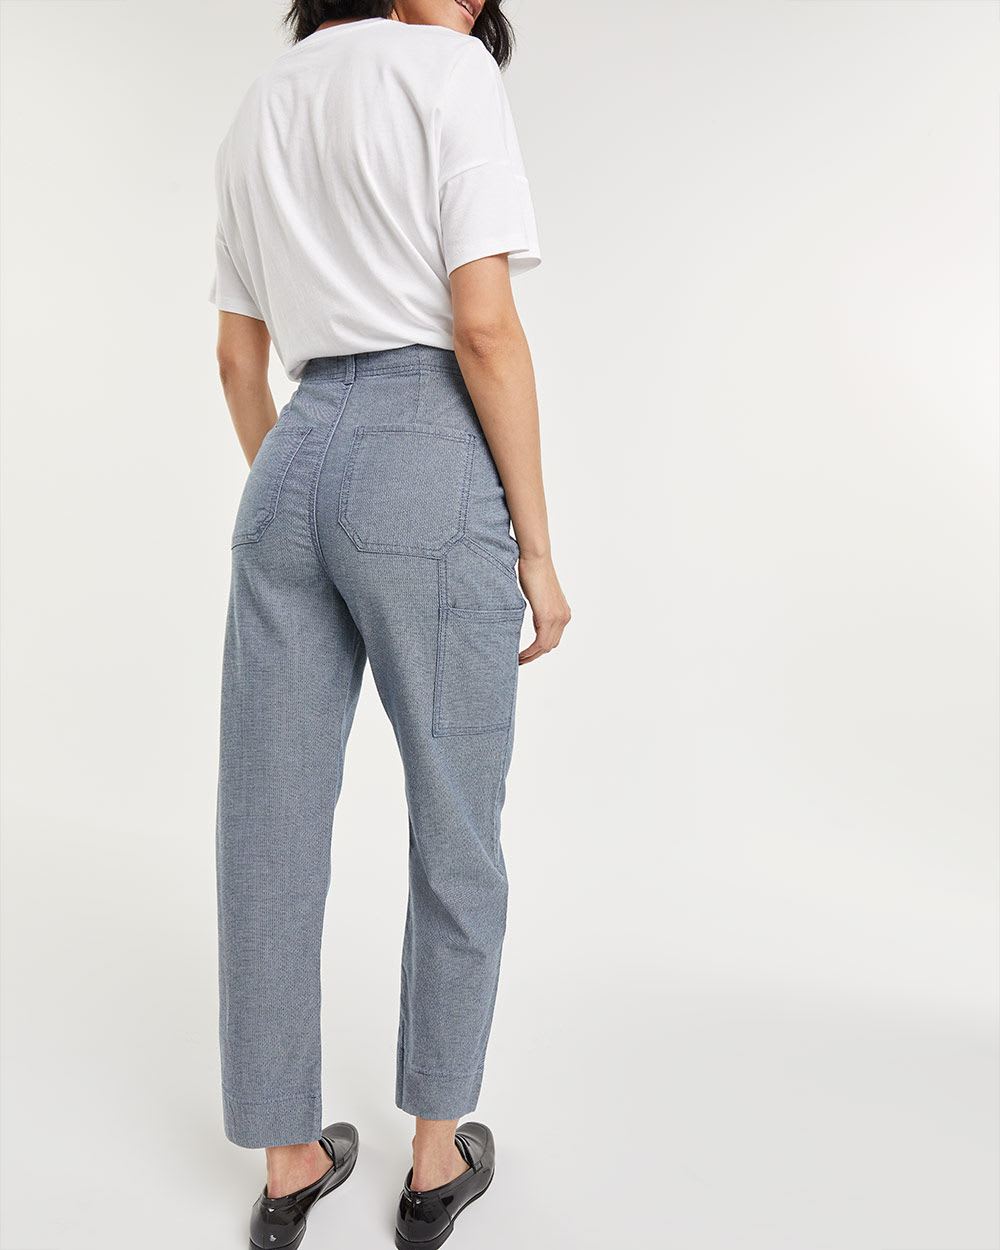 Pantalon chino cheville à jambe droite, taille haute et motif chevron – Petite